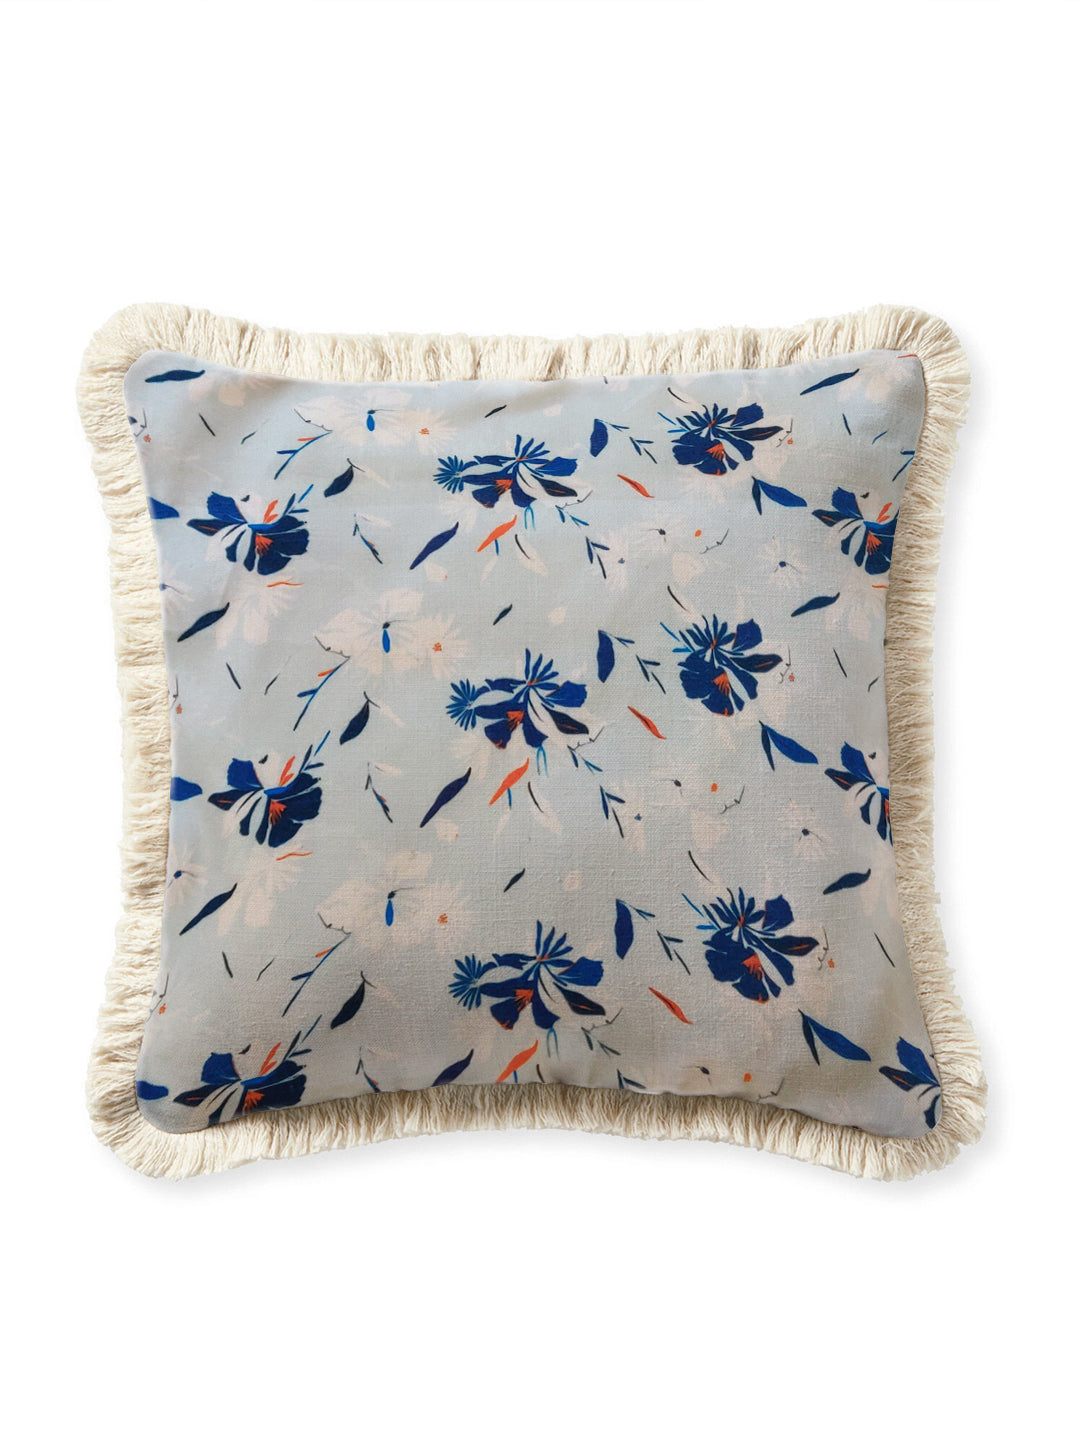 Dandelion cushion cover